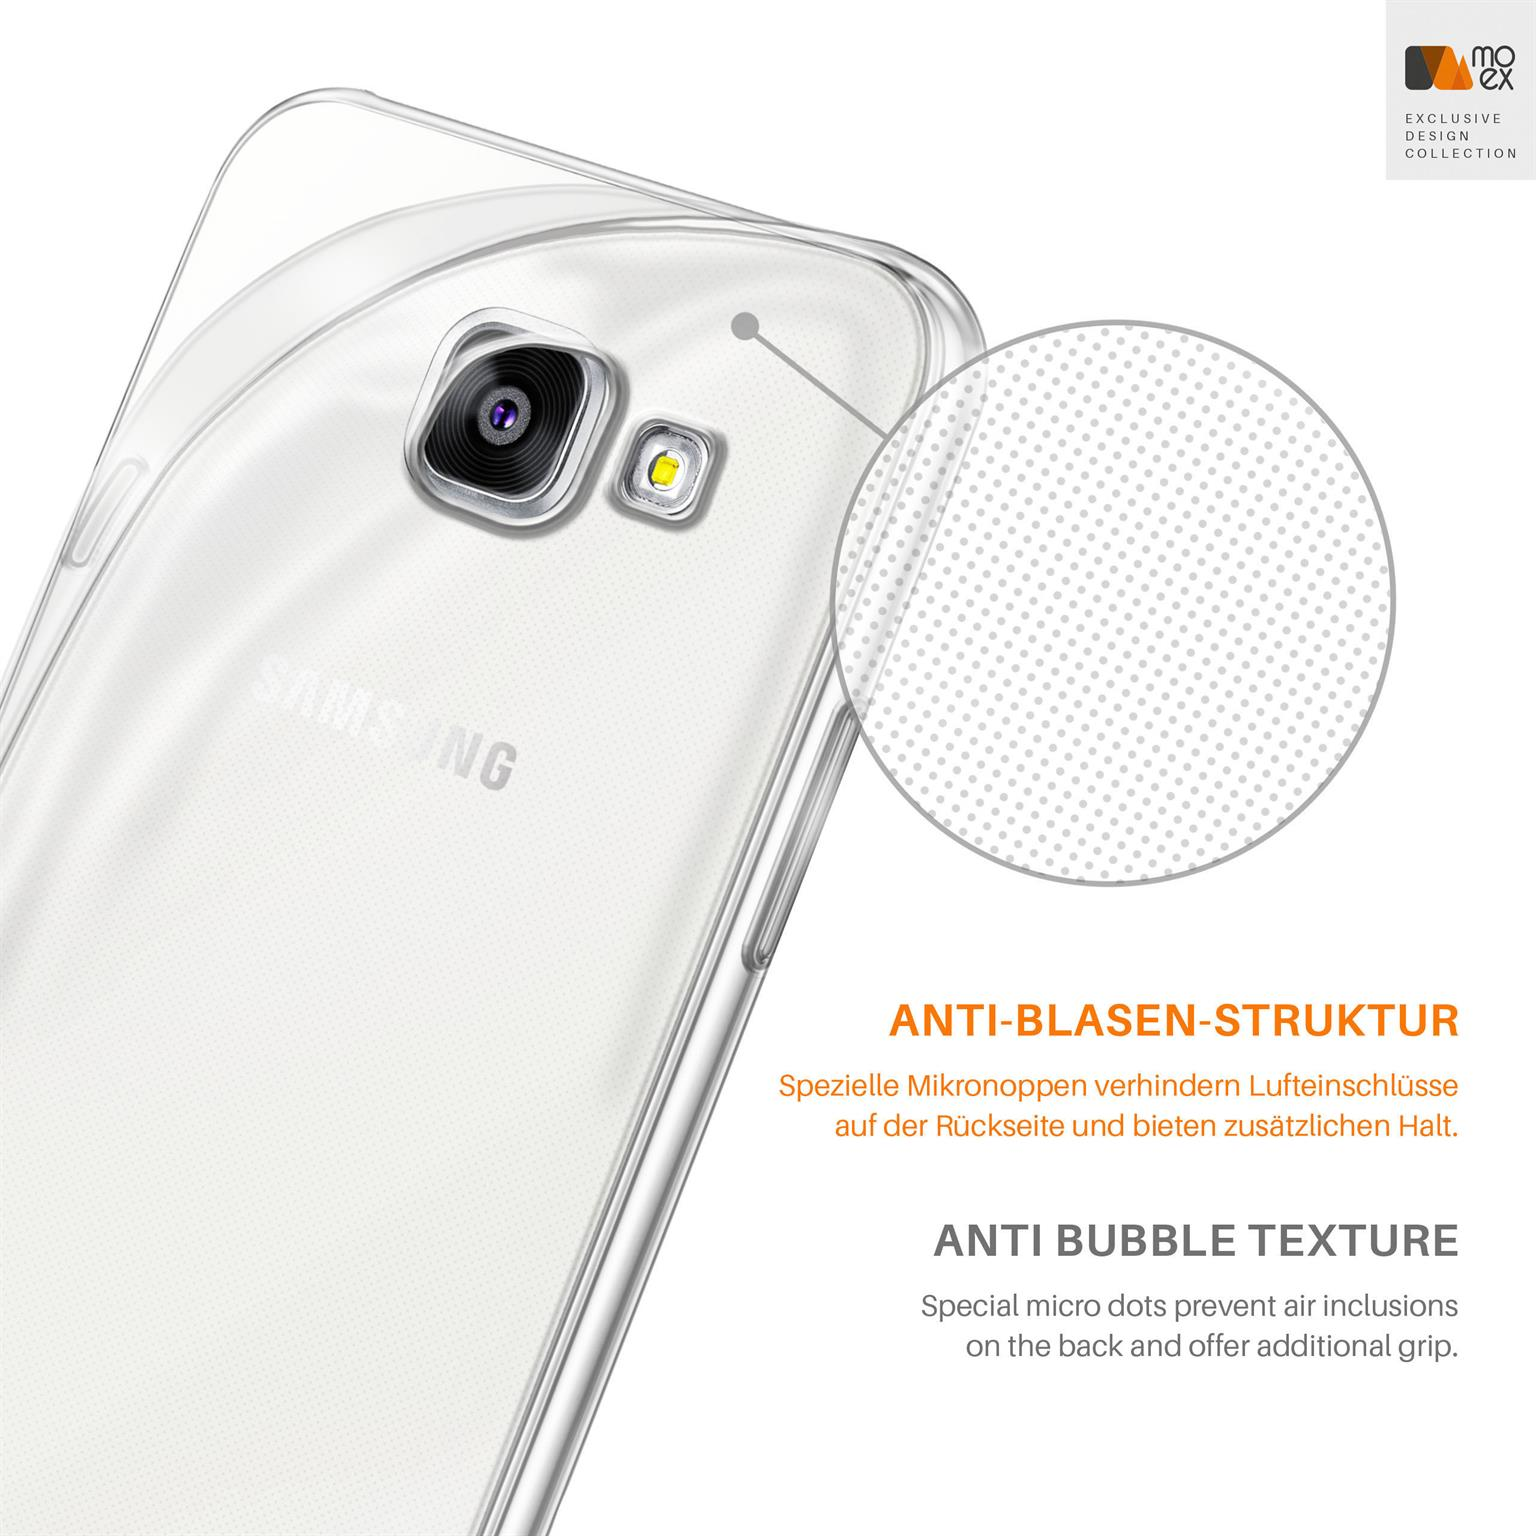 Samsung, A5 Backcover, Aero Crystal-Clear Galaxy Case, MOEX (2016),